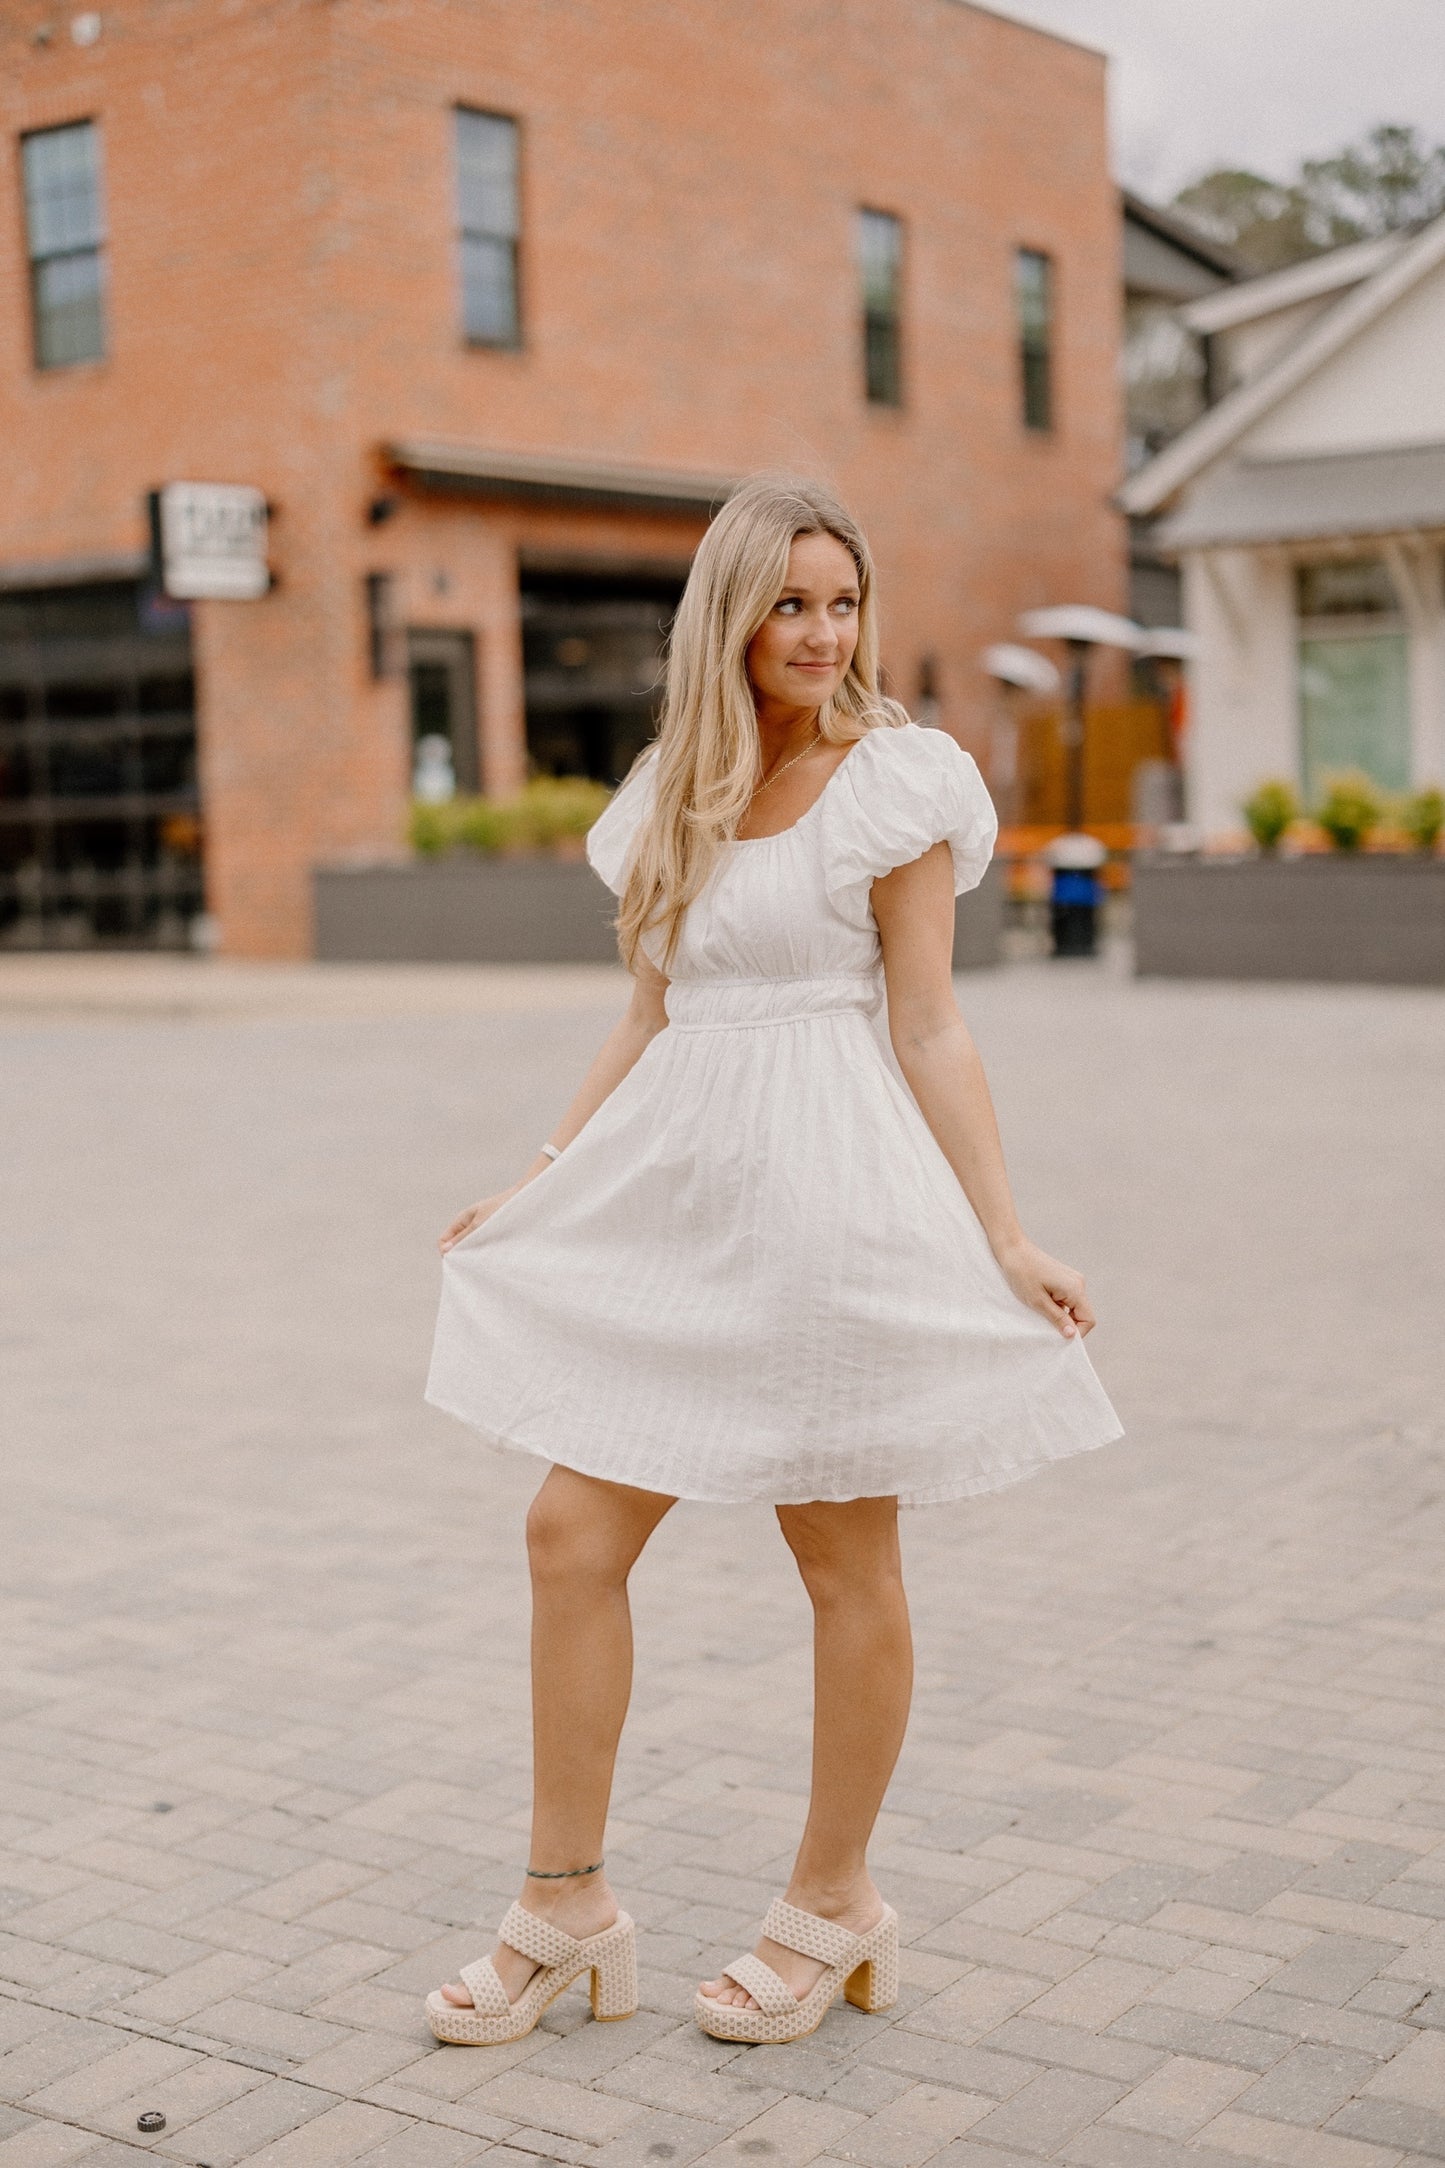 Meagan Elastic Waist White Dress